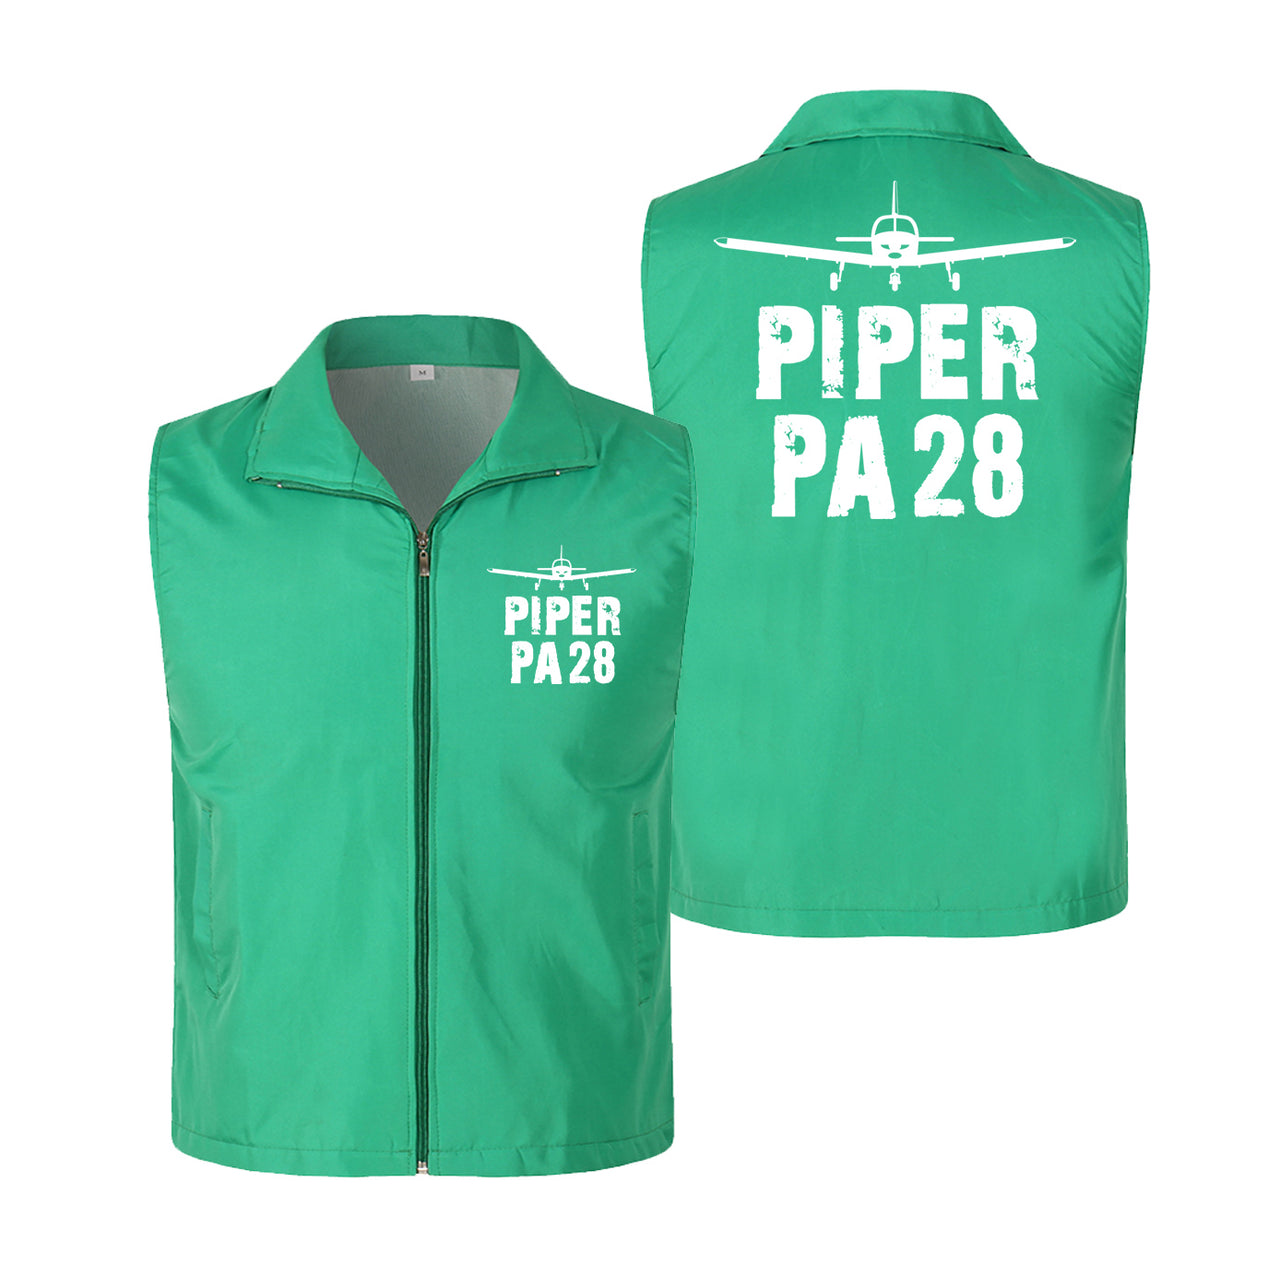 Piper PA28 & Plane Designed Thin Style Vests